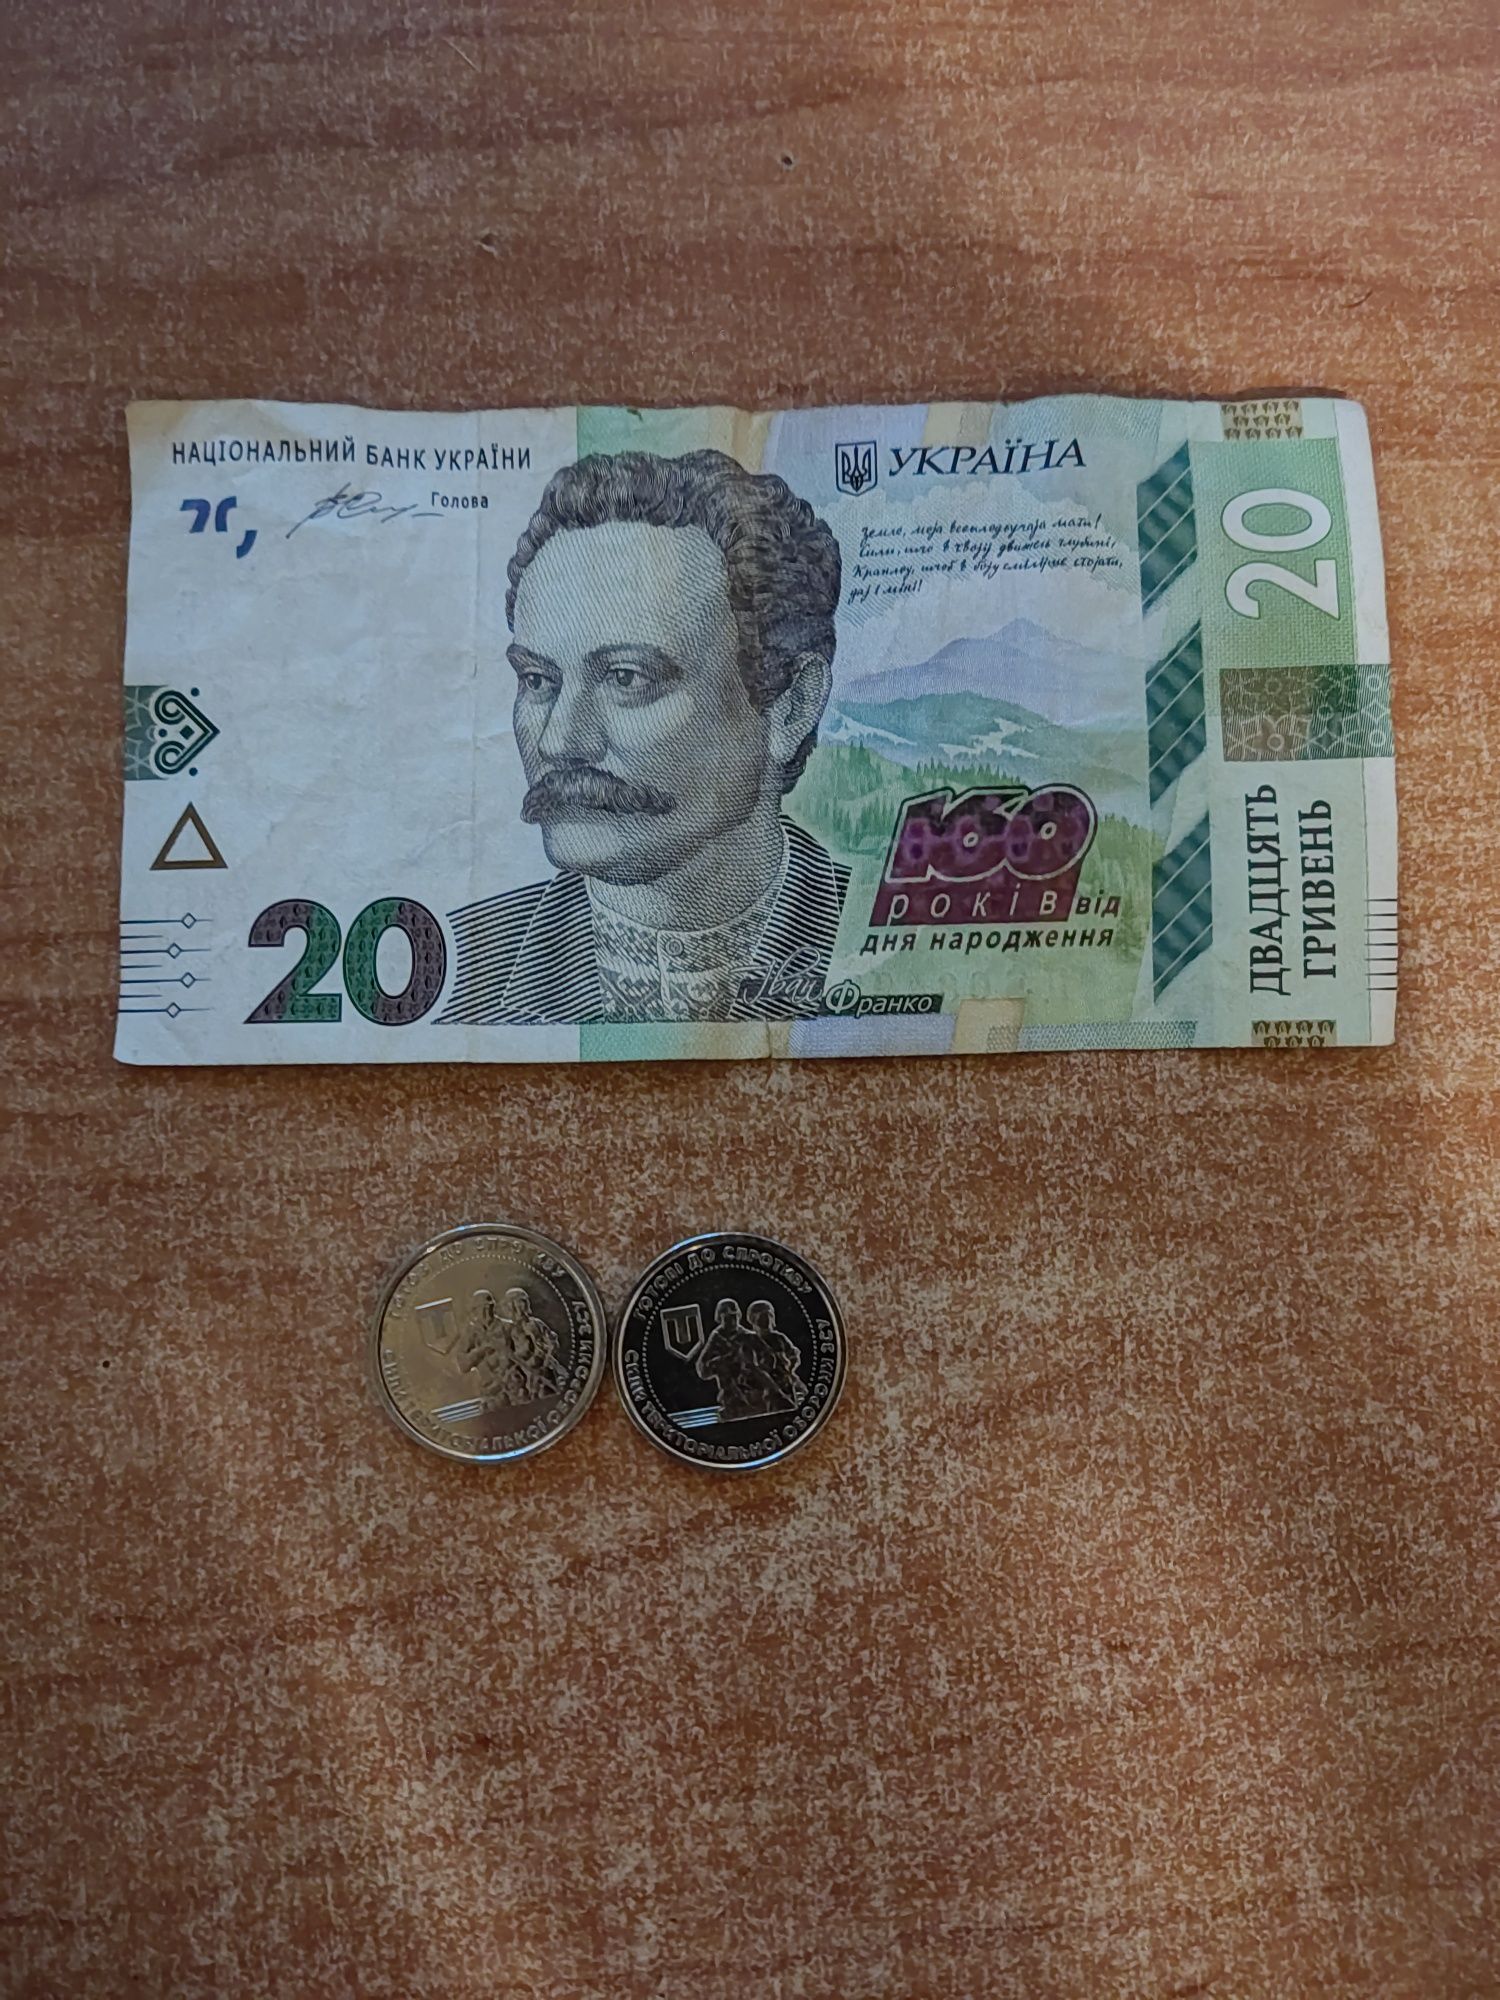 Купюра 20 грн, и 2 монеты с тро и одна 10 грн